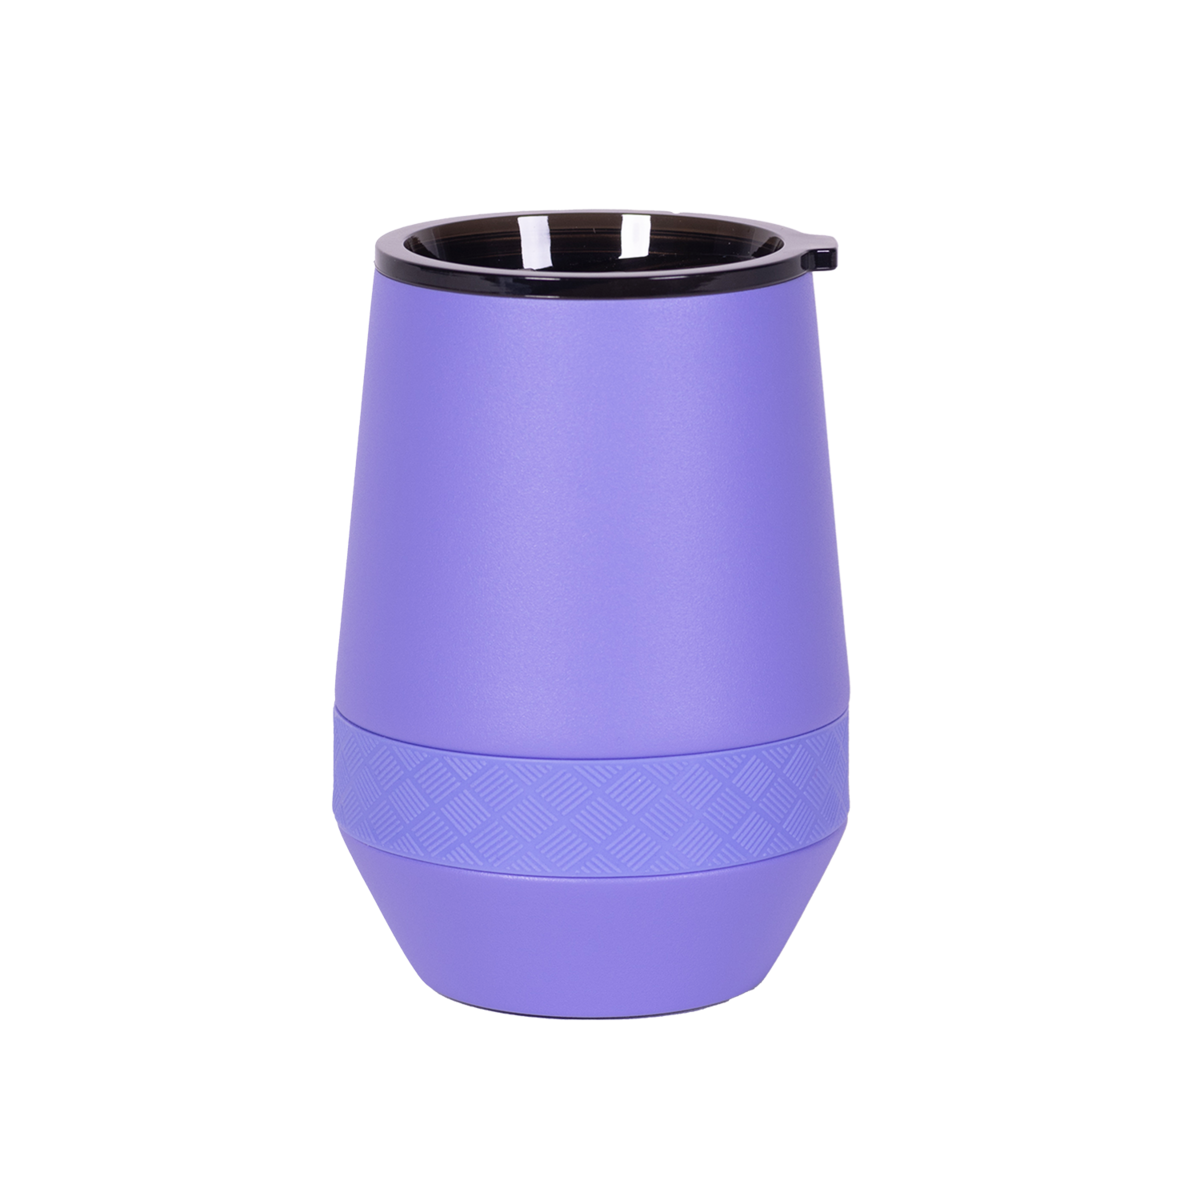 Customizable Elemental® 10 oz Stainless Steel Stemless Tumbler in lavender